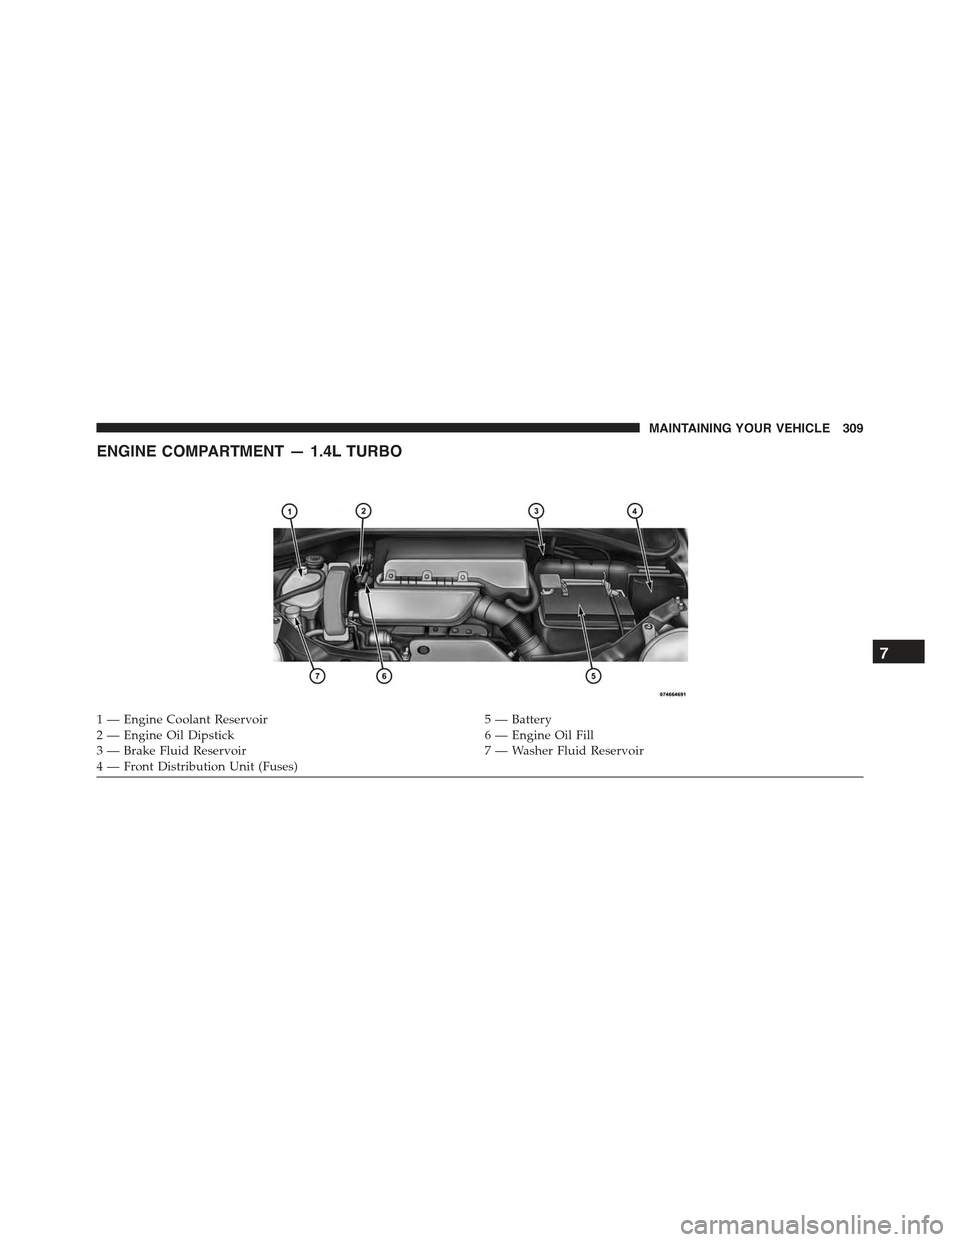 FIAT 500 ABARTH 2013 2.G Owners Manual ENGINE COMPARTMENT — 1.4L TURBO
1 — Engine Coolant Reservoir5 — Battery2—EngineOilDipstick6—EngineOilFill3 — Brake Fluid Reservoir7 — Washer Fluid Reservoir4—FrontDistributionUnit(Fuse